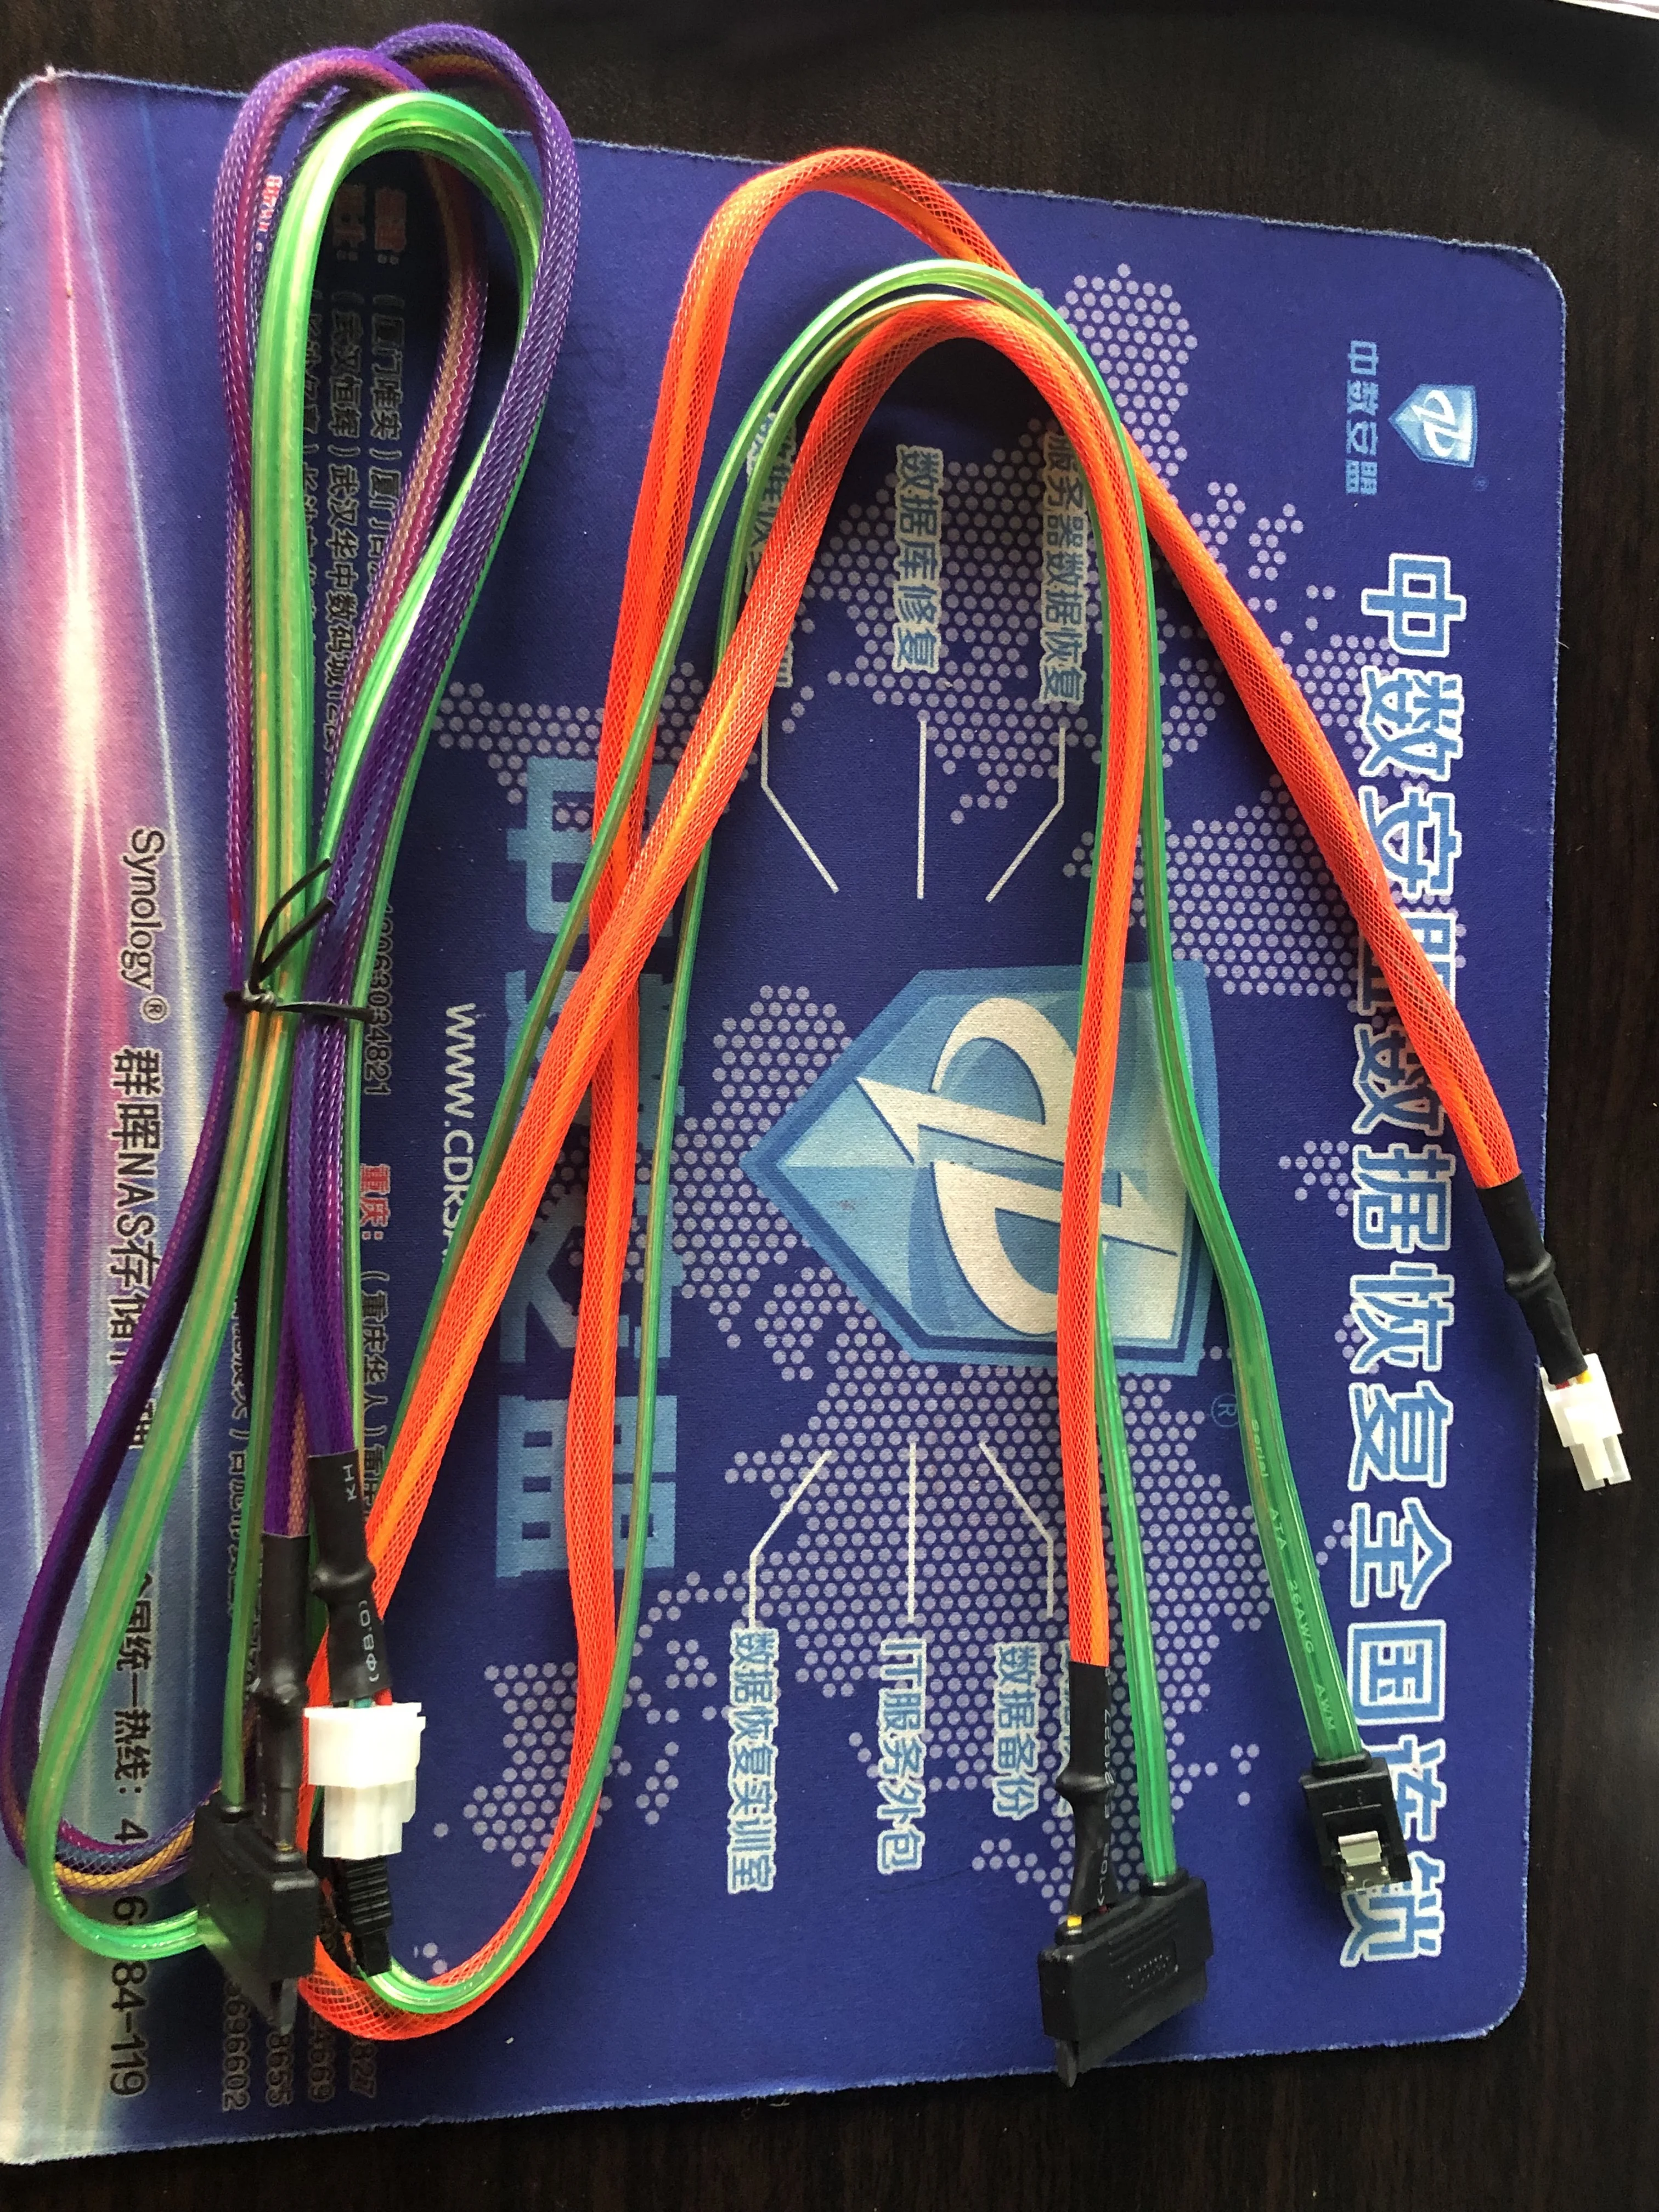 

MRT PC3000 Power Cord with Braided Net Sheath Contains SATA6GB Data Line 100cm 1M Long